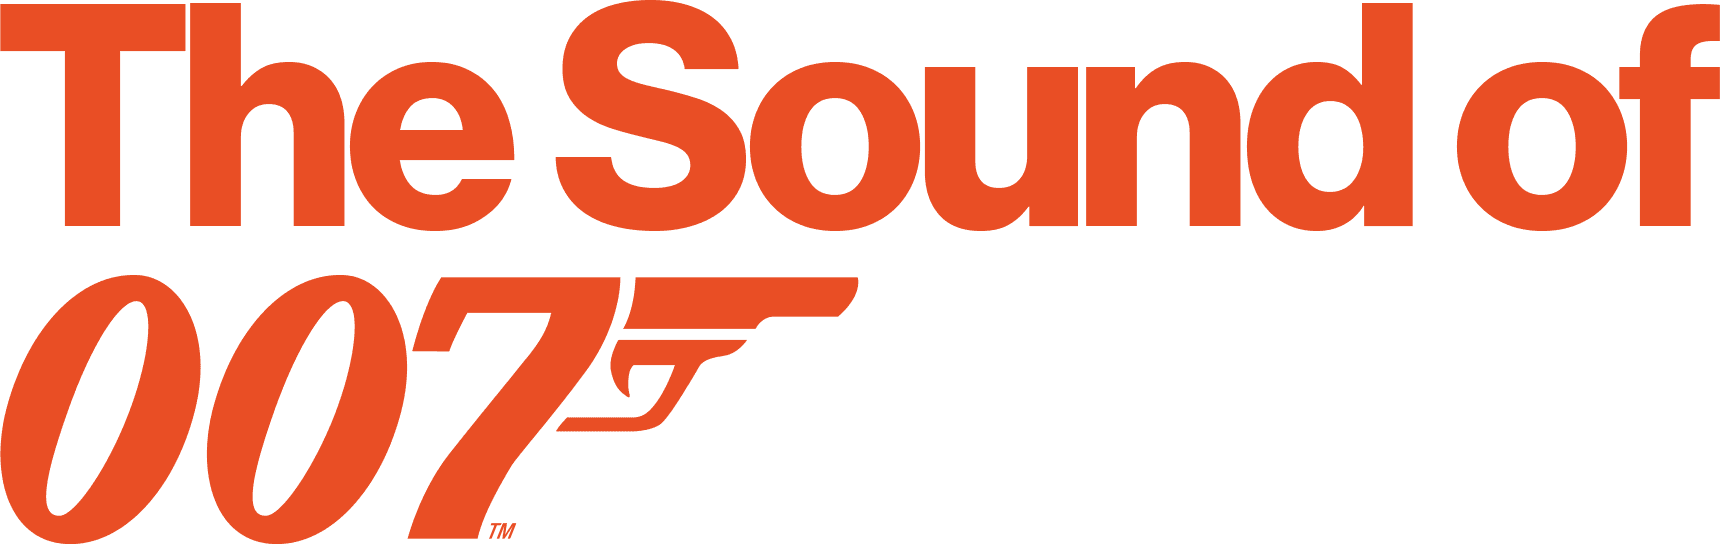 The Sound of 007 logo